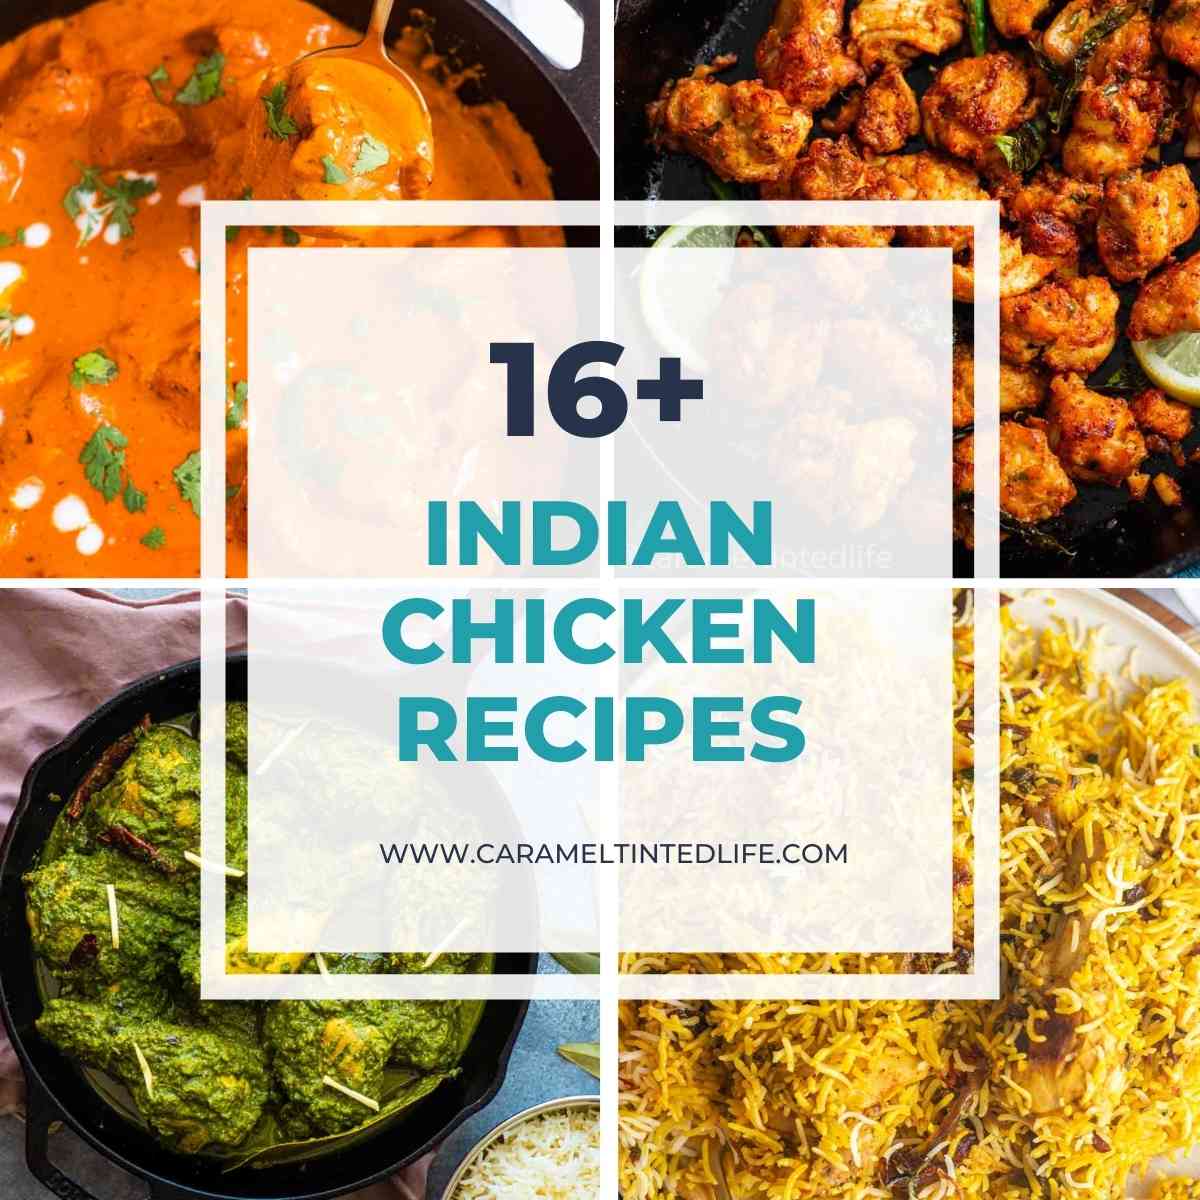 https://carameltintedlife.com/wp-content/uploads/2022/03/Indian-chicken-recipes-.jpg